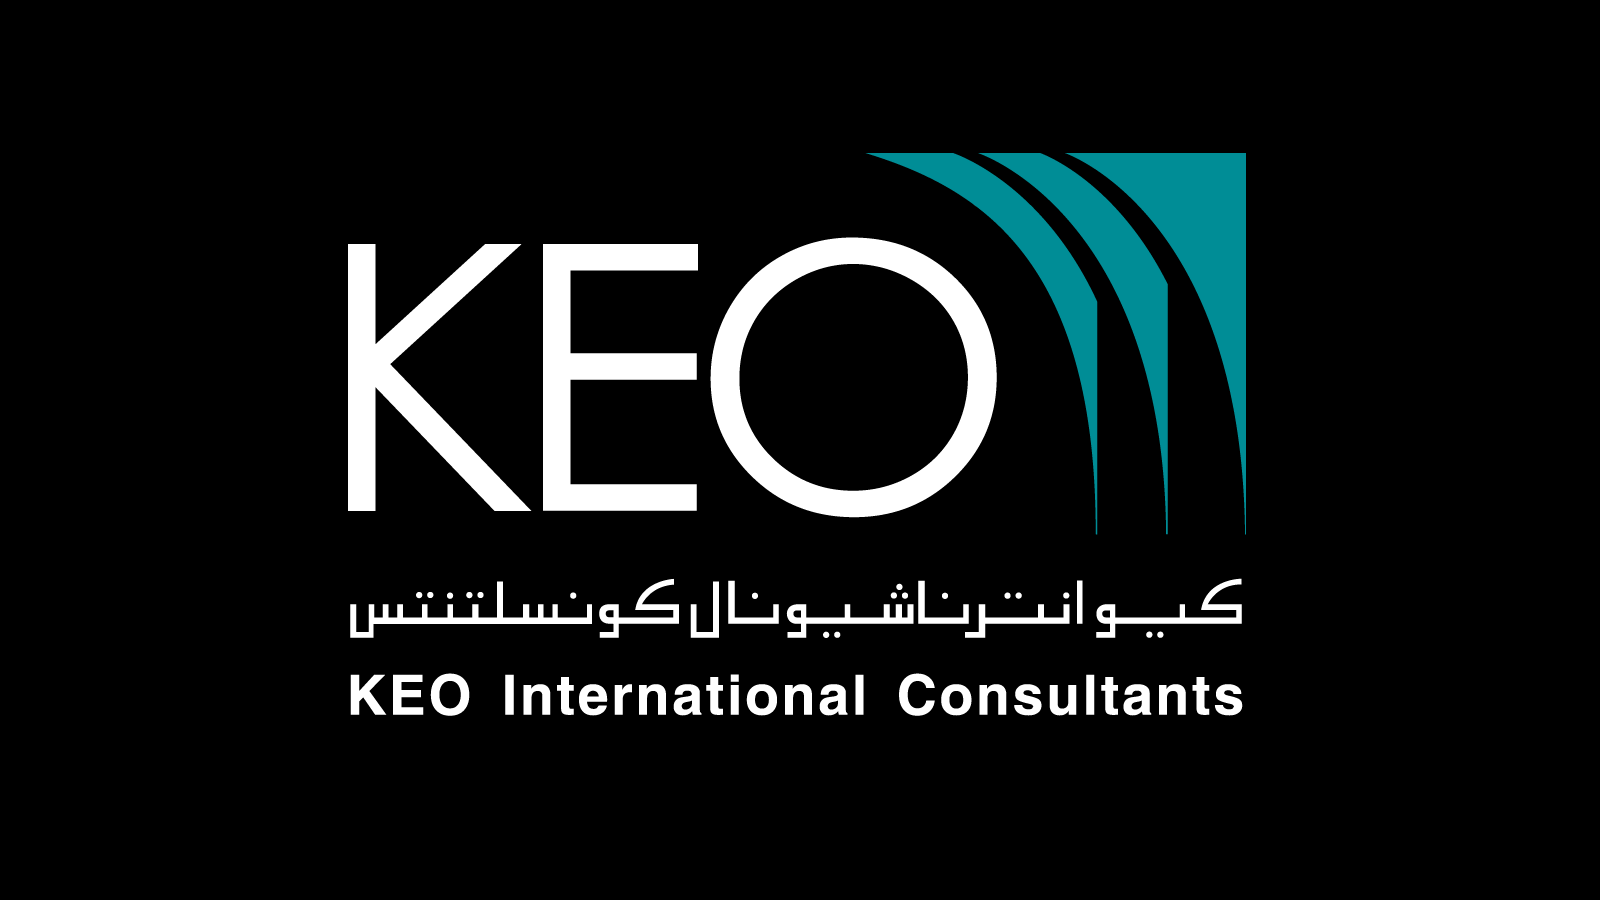 Keo Logo - KEO International Consultants logo | Dwglogo